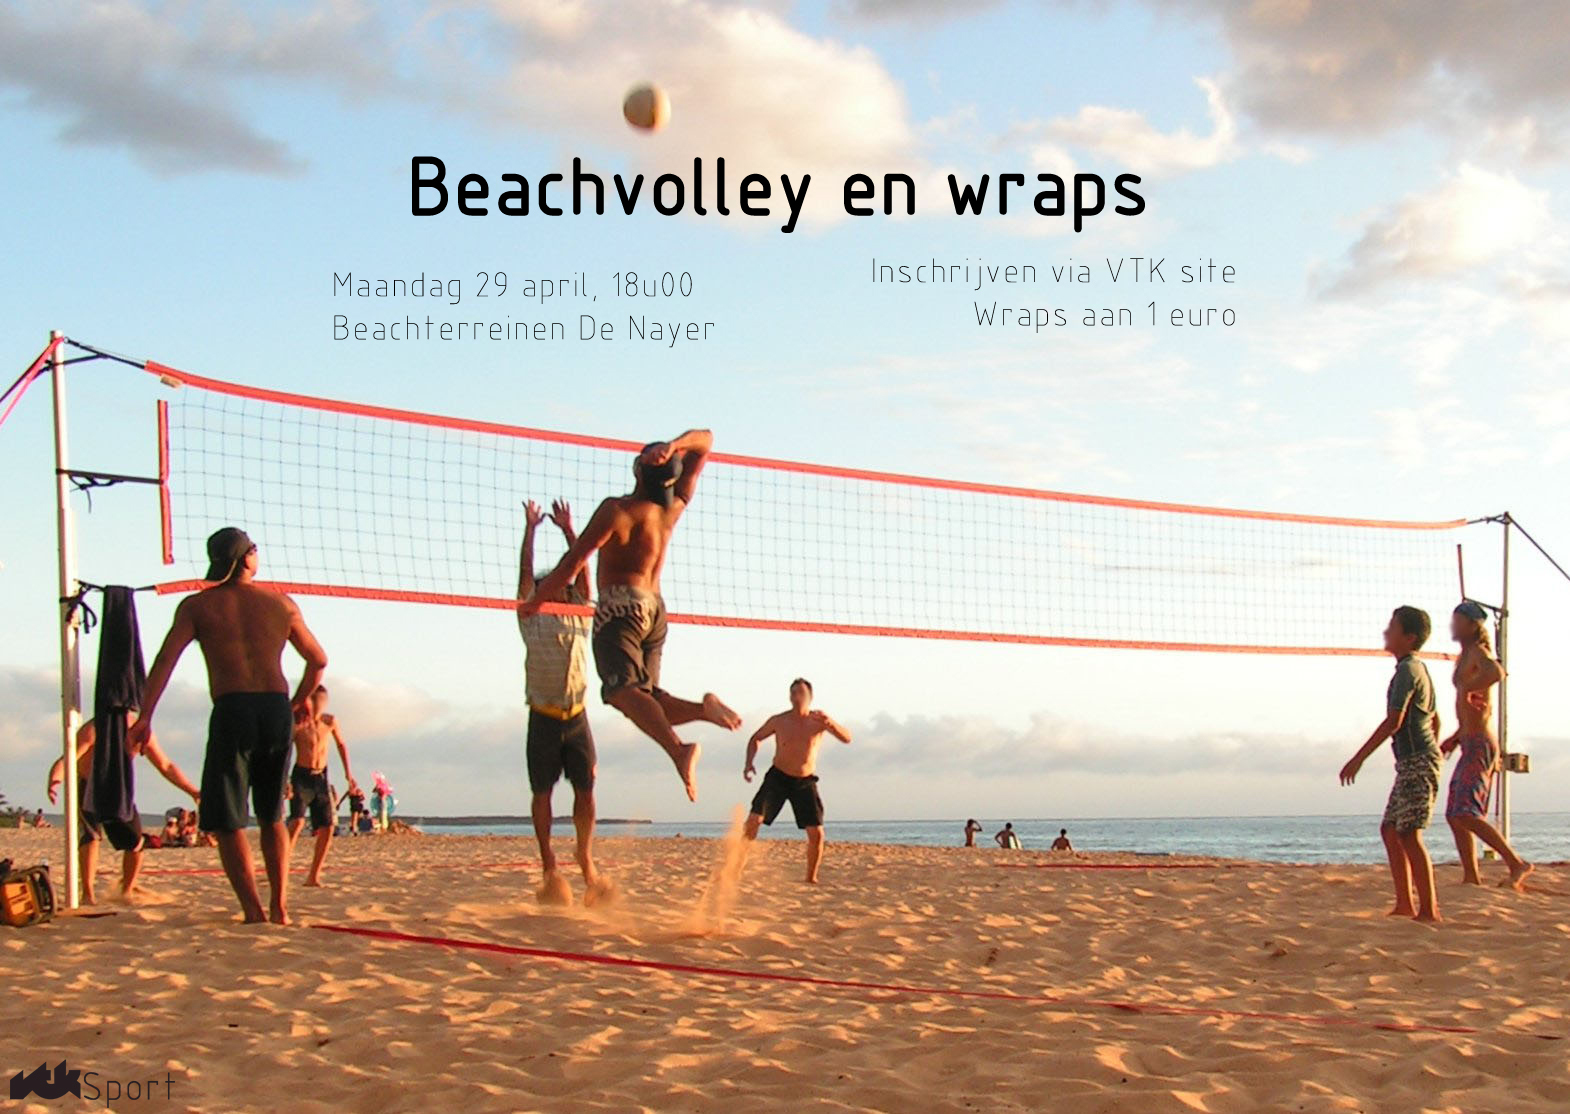 Svdm: Beachvolley en wraps